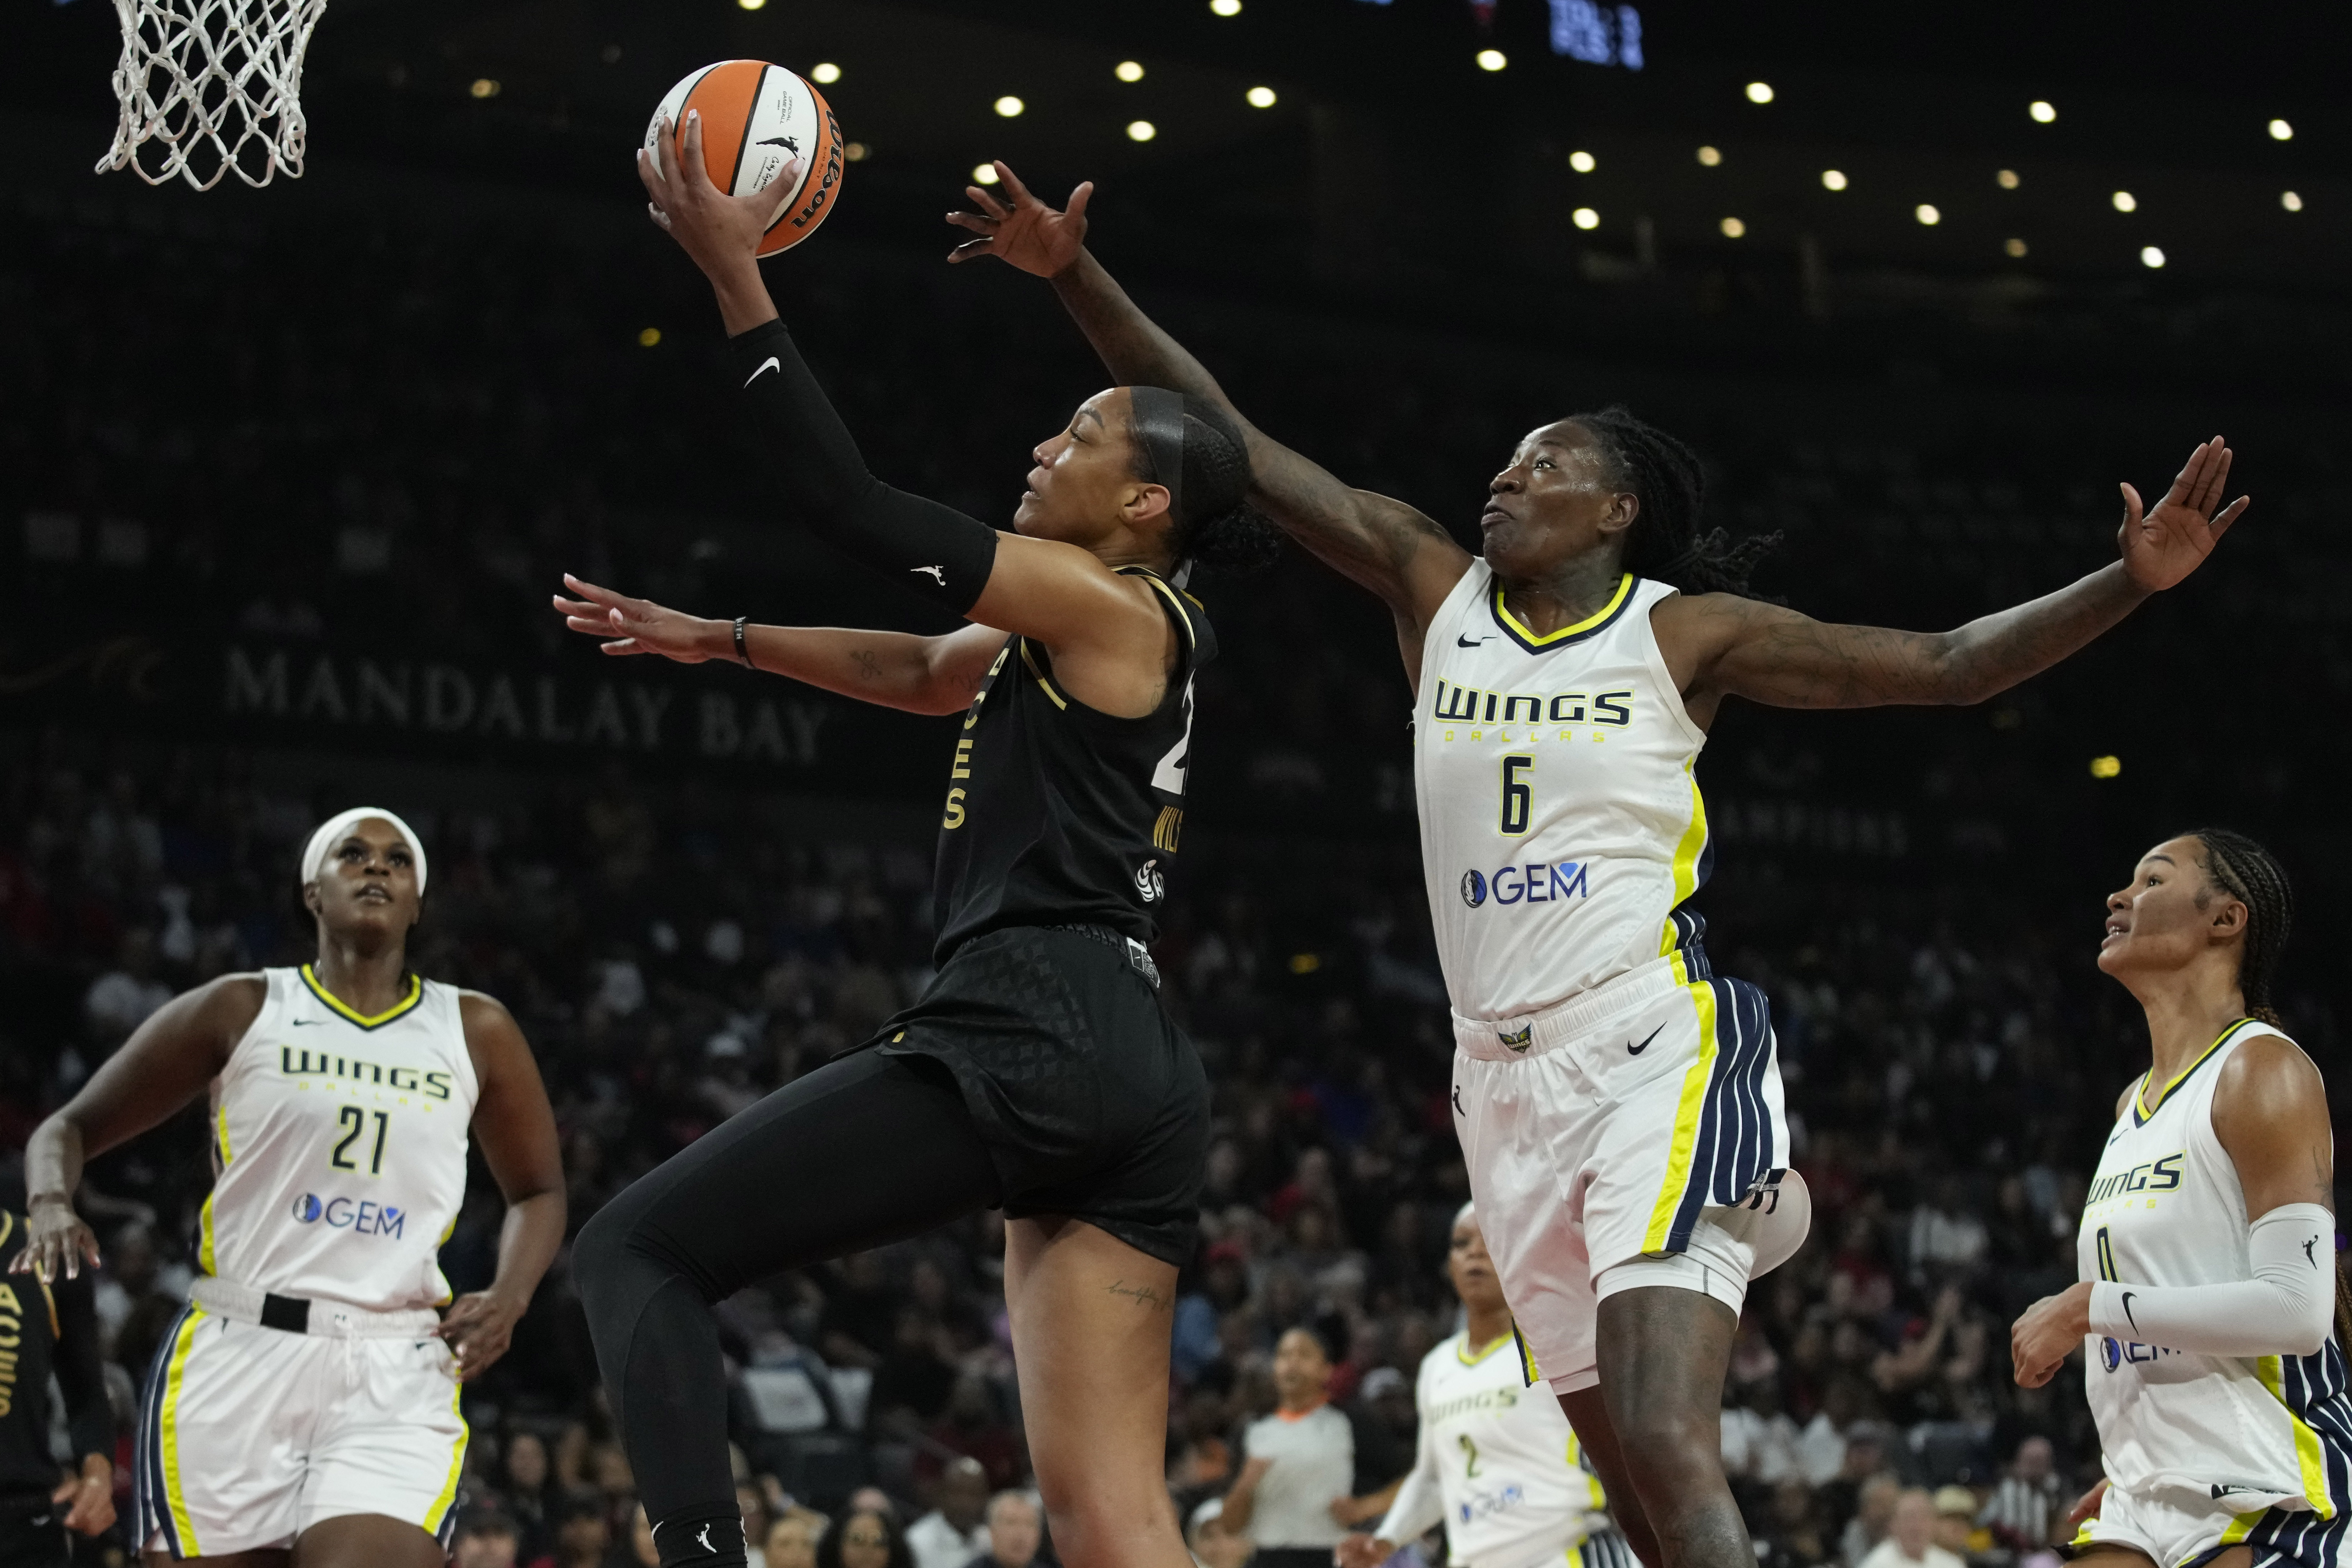 WNBA Playoffs Round 1 takeaways: The Las Vegas Aces are not